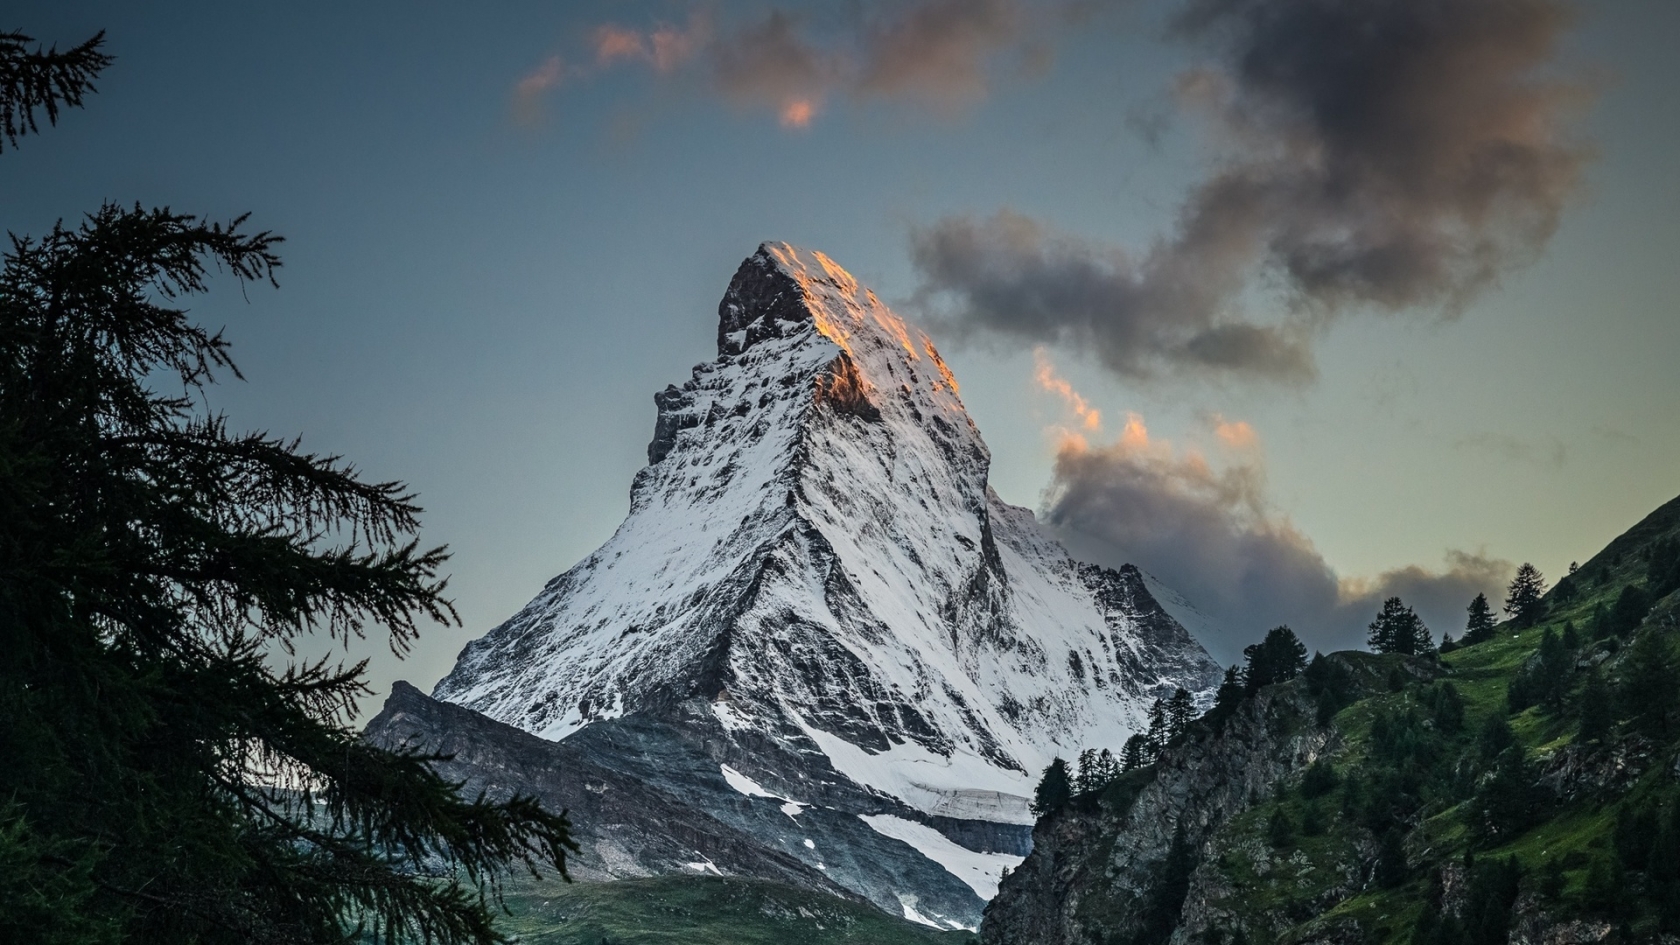 Amazing Mountain Peak for 1680 x 945 HDTV resolution